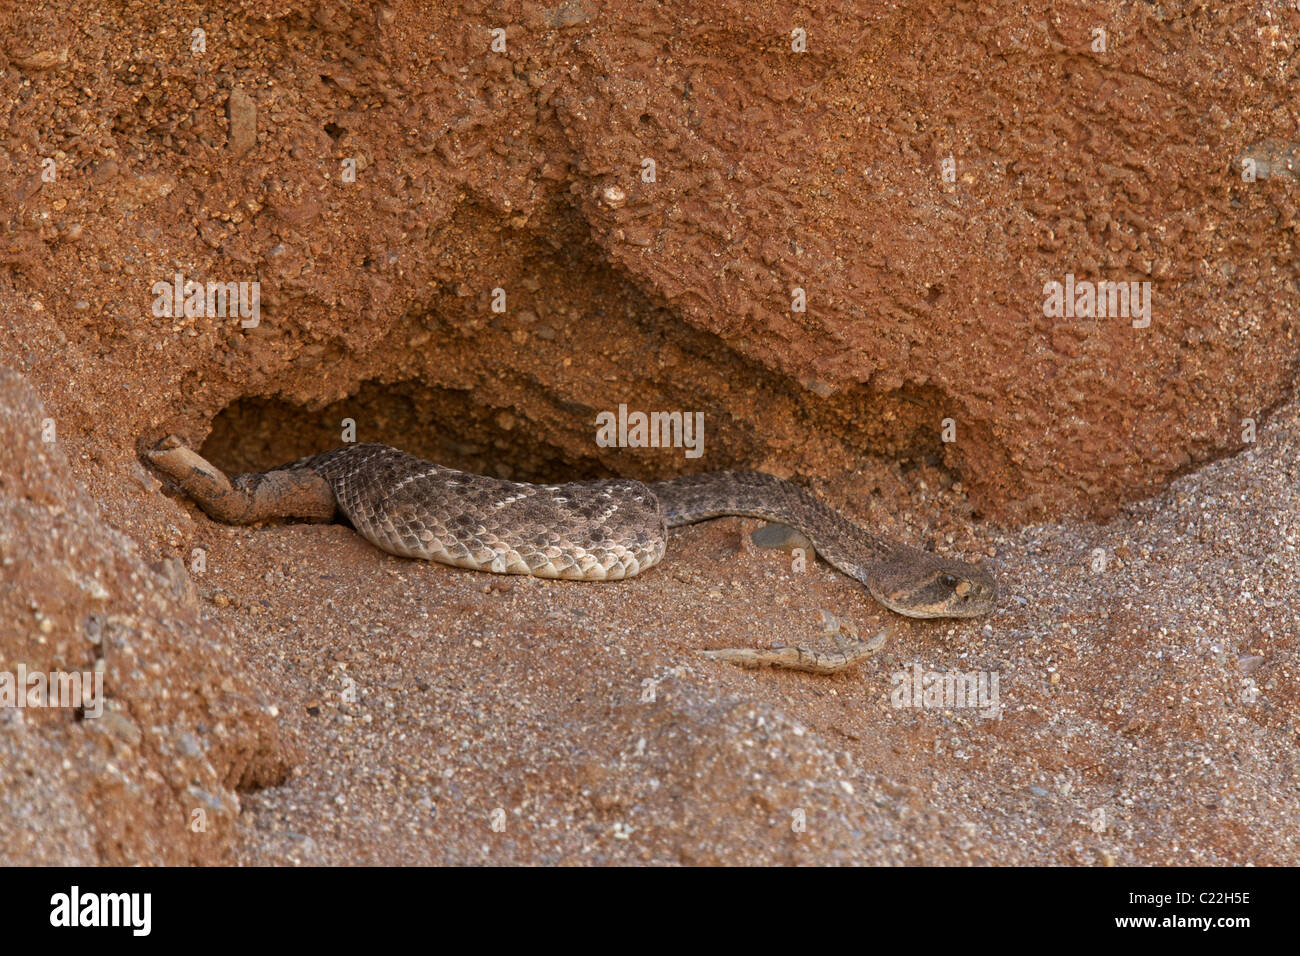 Western Diamond-backed Rattlesnake(s) (Crotalus atrox) - Arizona - USA - Deserto Sonoran - emergente dal letargo invernale sito Foto Stock